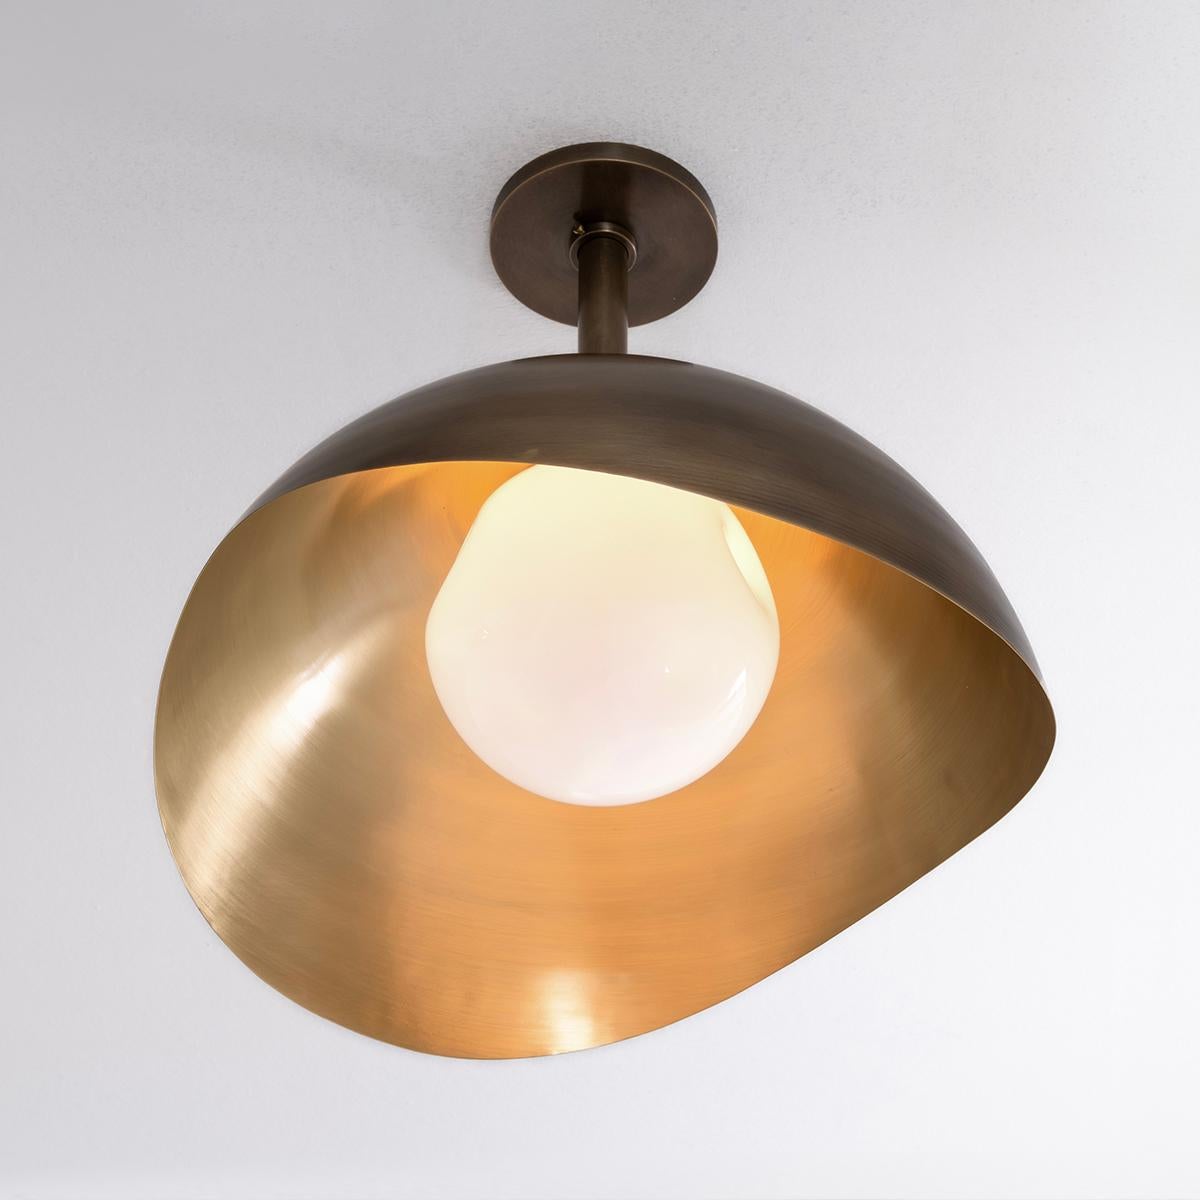 Perla Grande Ceiling Light - Copper Interior and Enamel Exterior For Sale 4